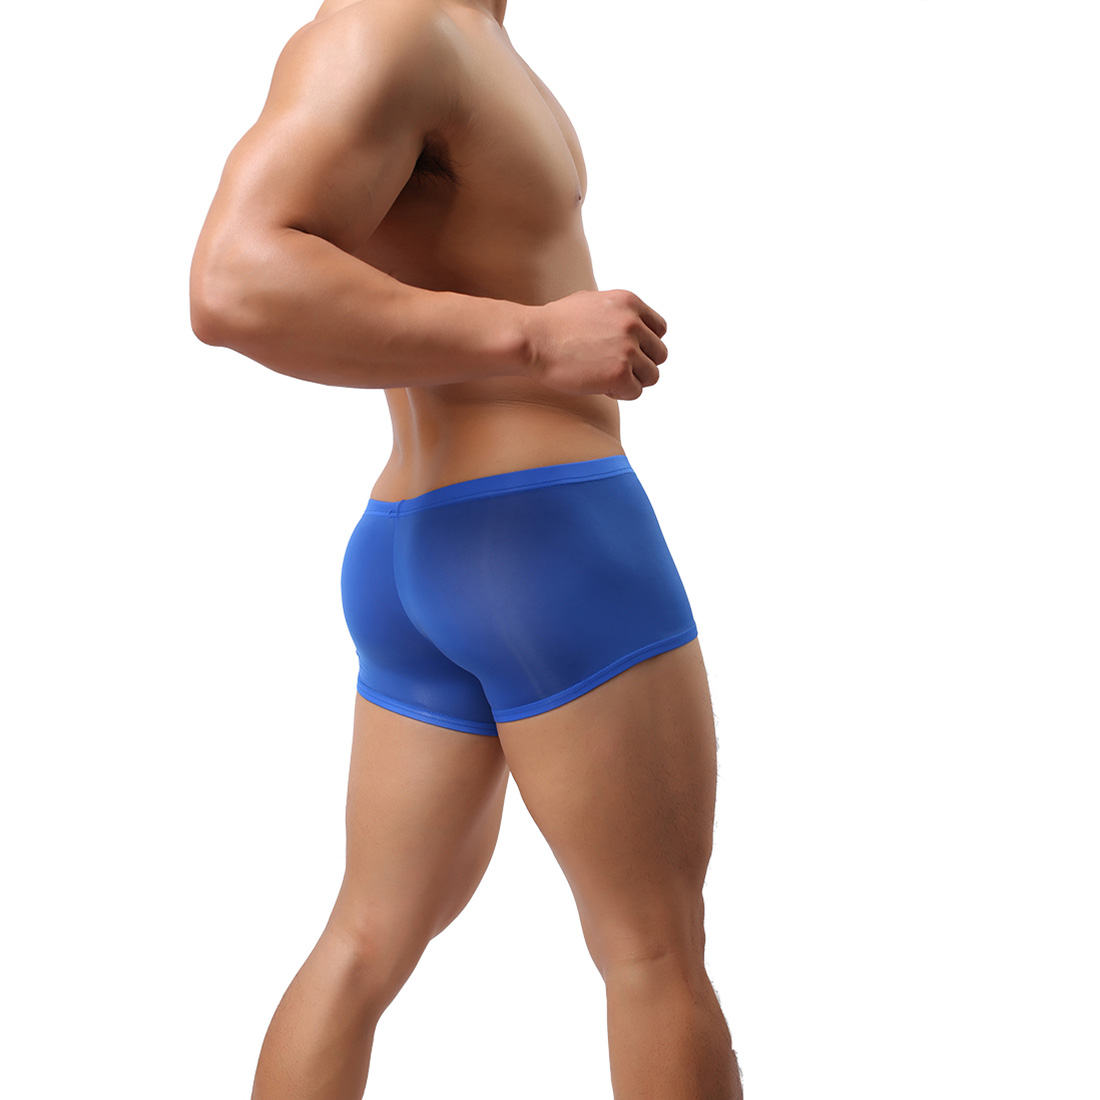 Men's Sexy Lingerie Underwear See-through Boxer Shorts Underpants WH42 Blue XL